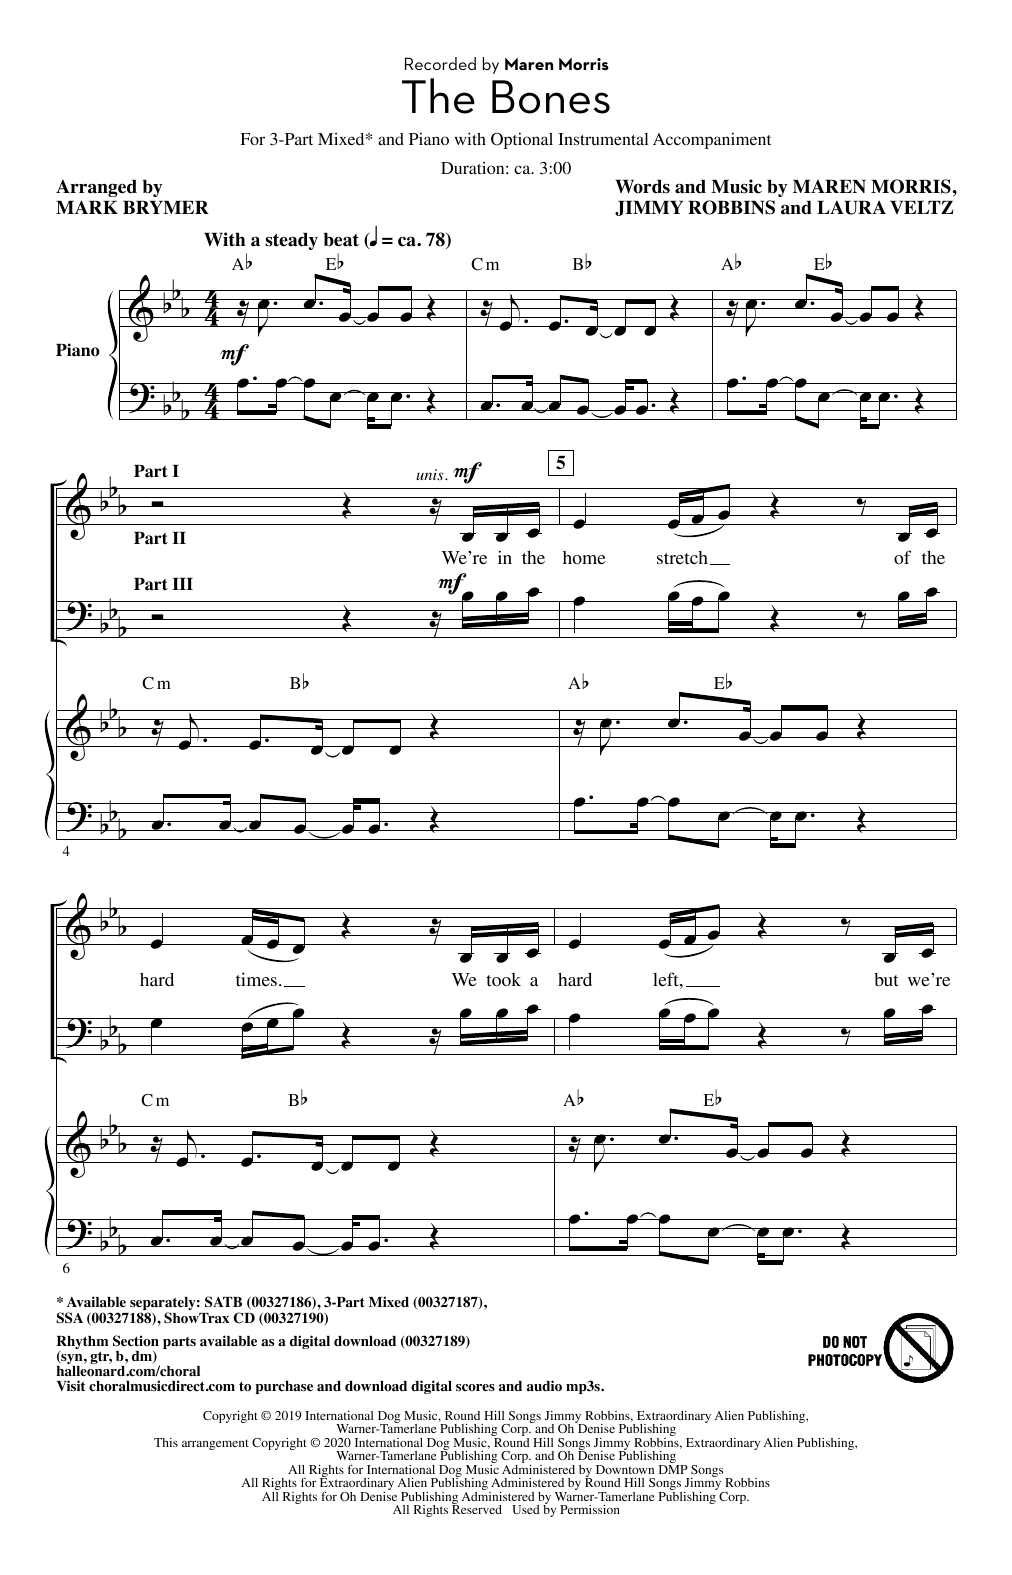 Maren Morris The Bones (arr. Mark Brymer) Sheet Music Notes & Chords for SATB Choir - Download or Print PDF